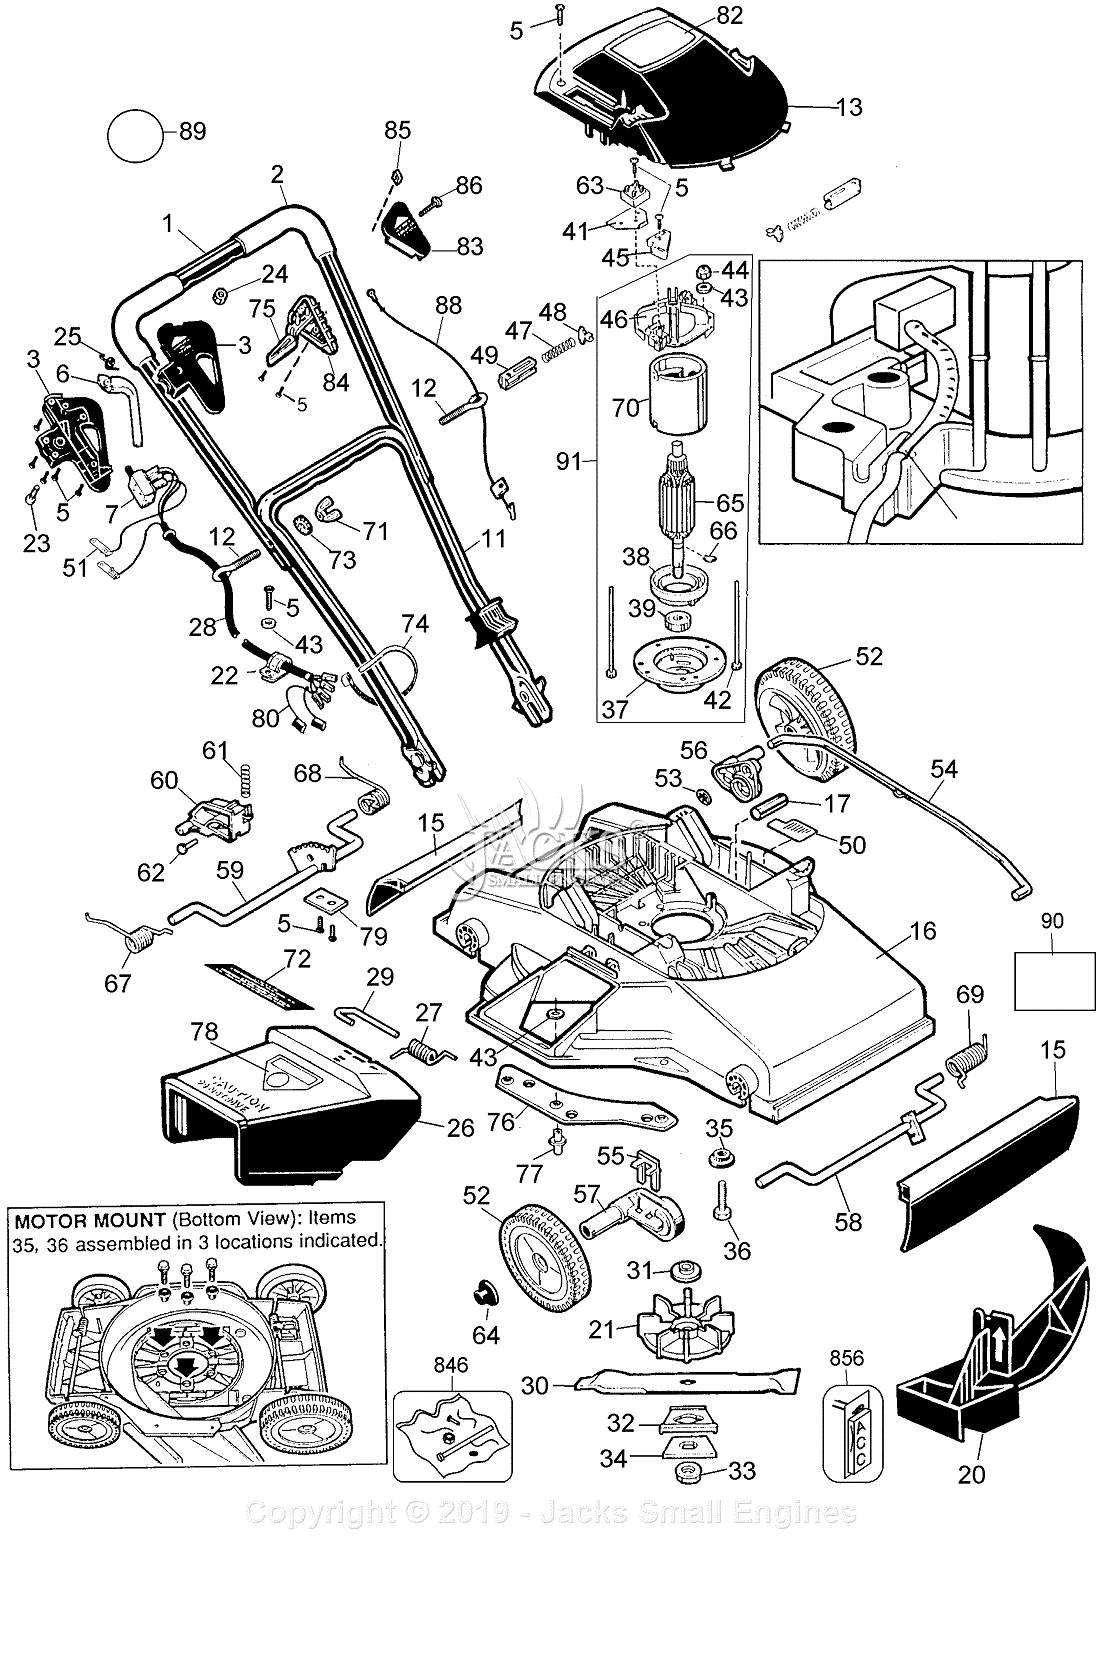 https://az417944.vo.msecnd.net/diagrams/manufacturer/black-decker/lawn-mower/mm600-type-2/mower/diagram_4.gif